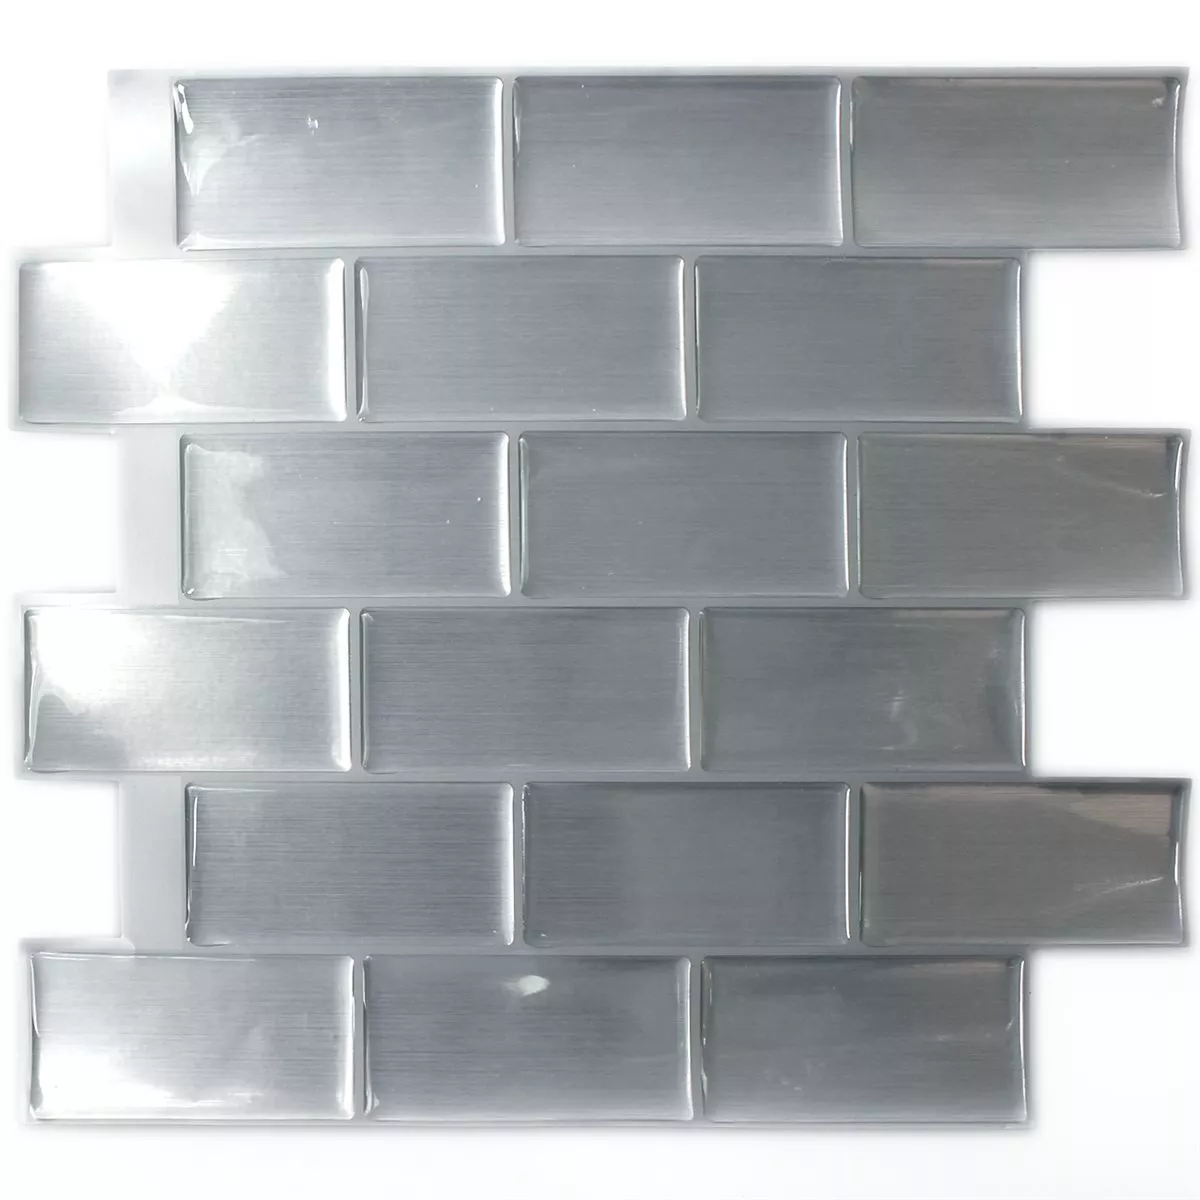 Mosaic Tiles Vinyl Stainless Steel Optic Silver